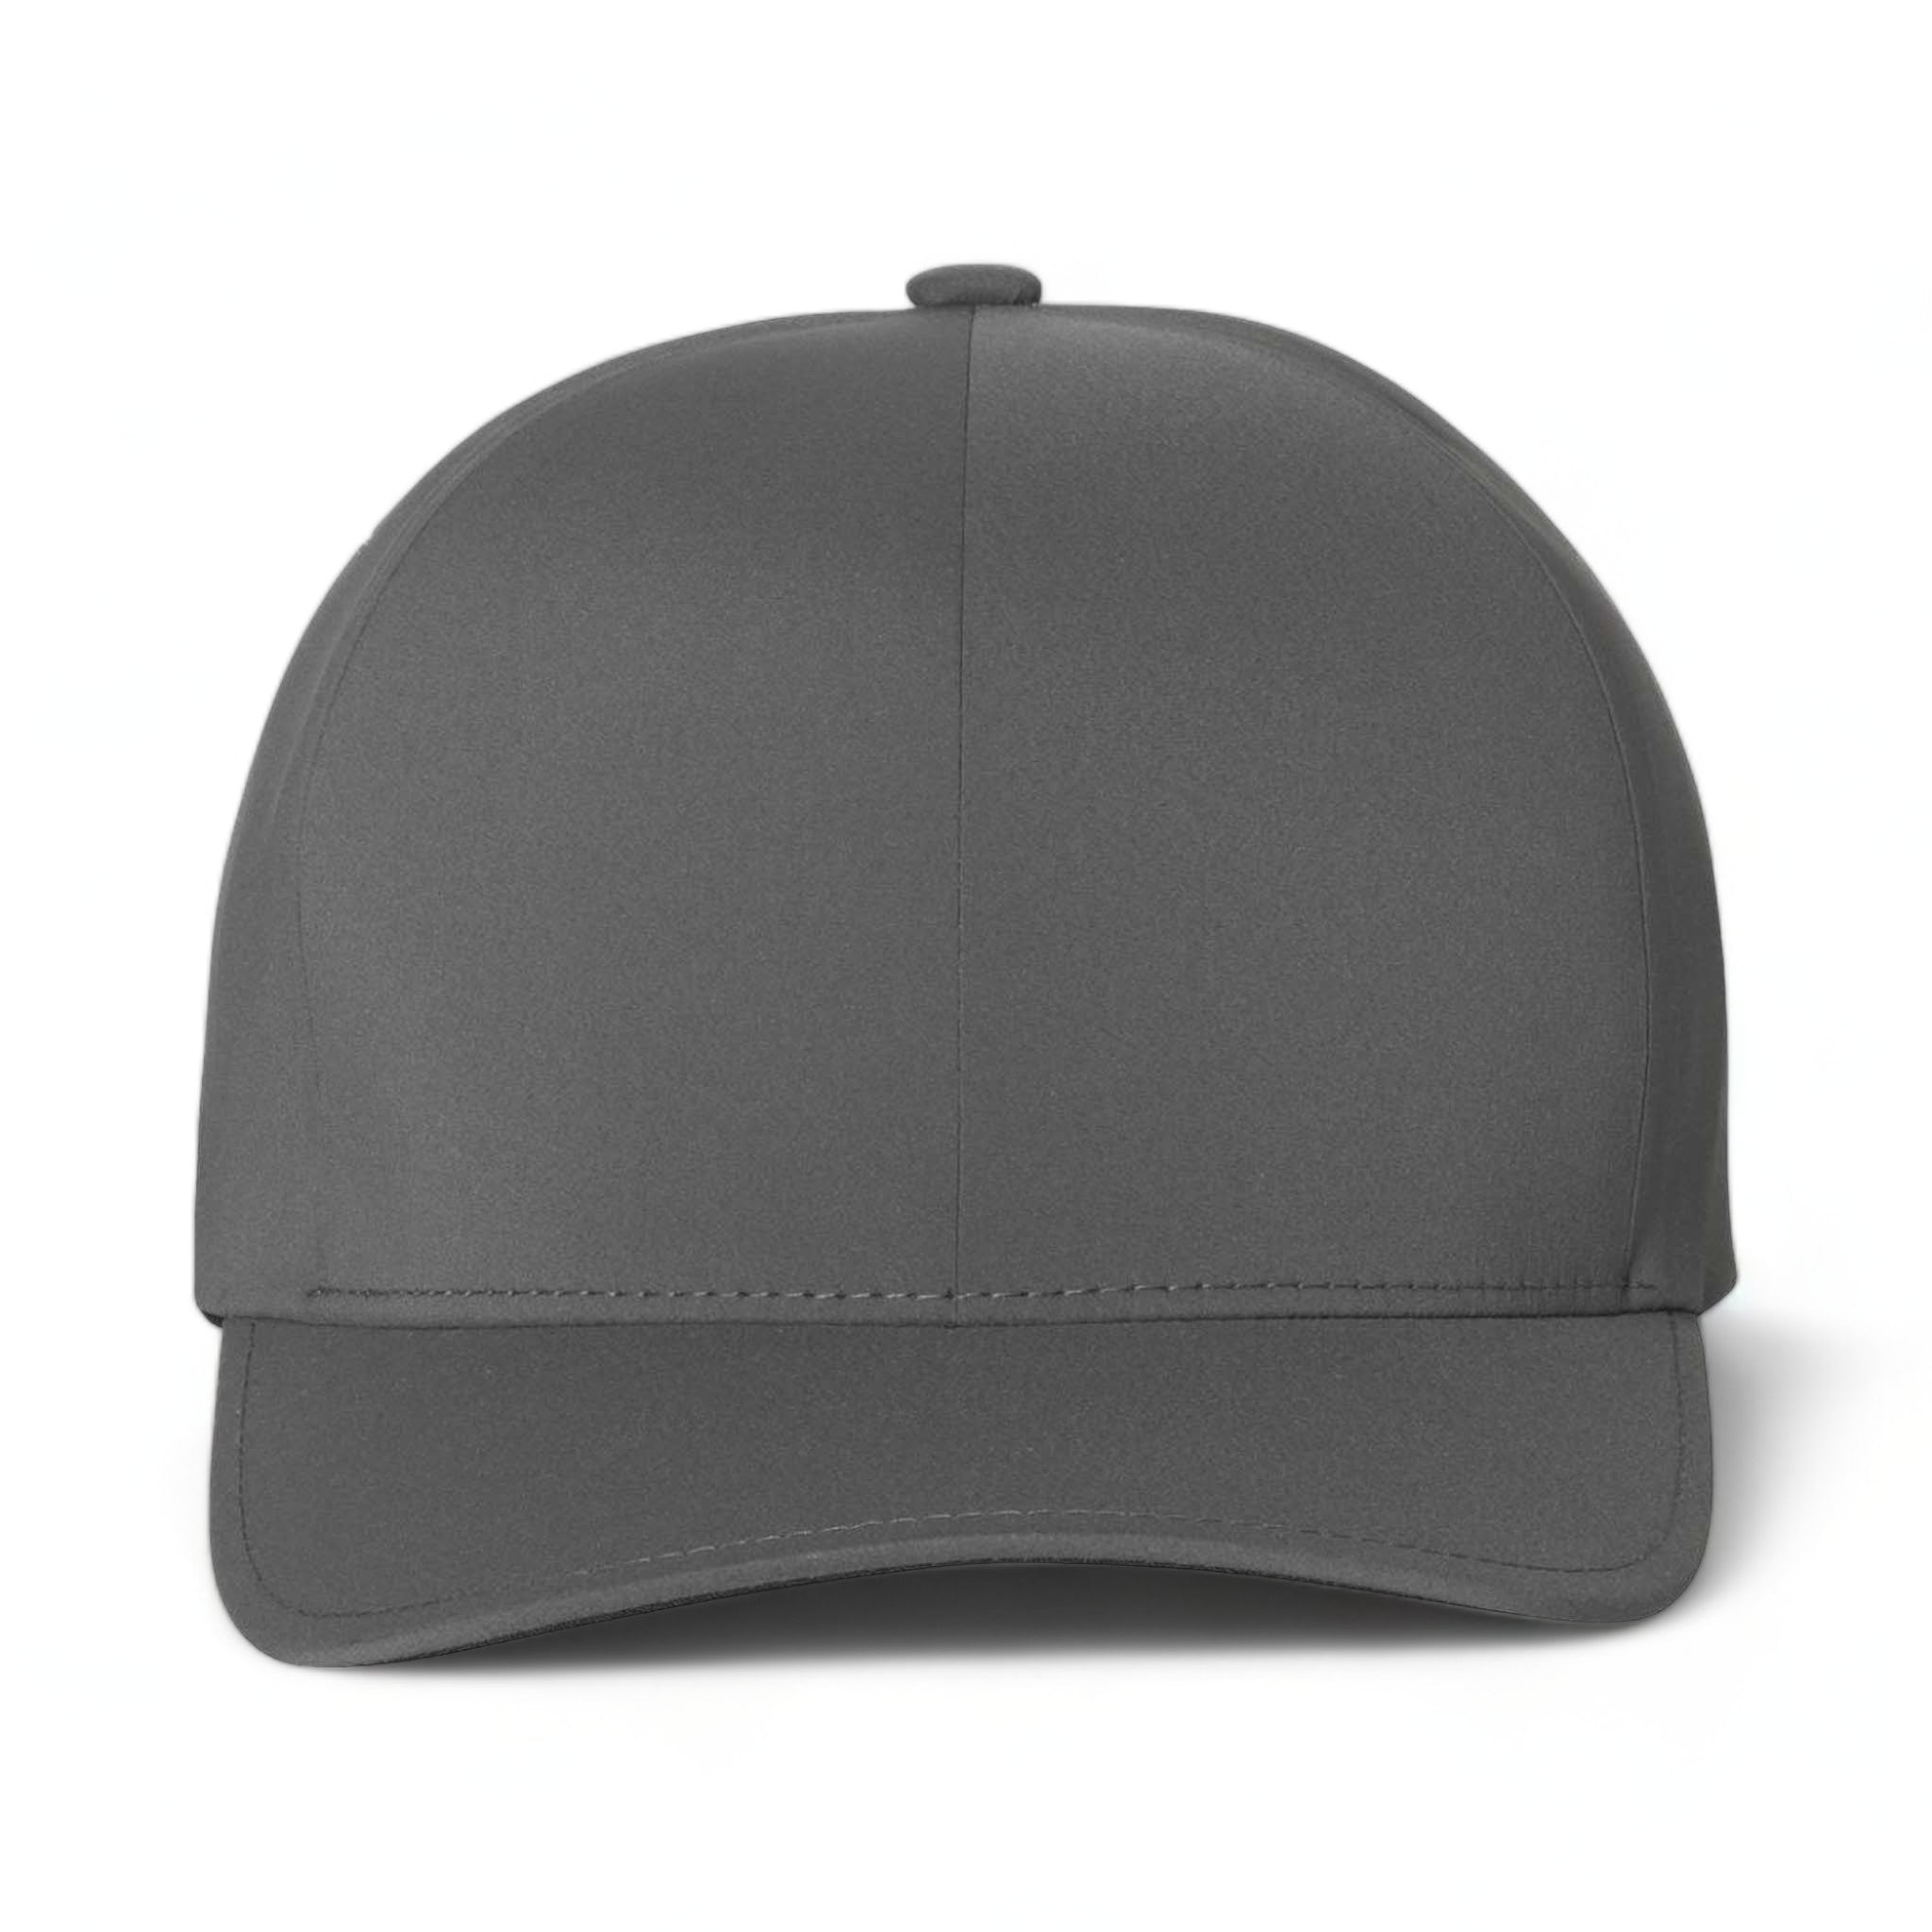 Front view of Flexfit 180 custom hat in dark grey